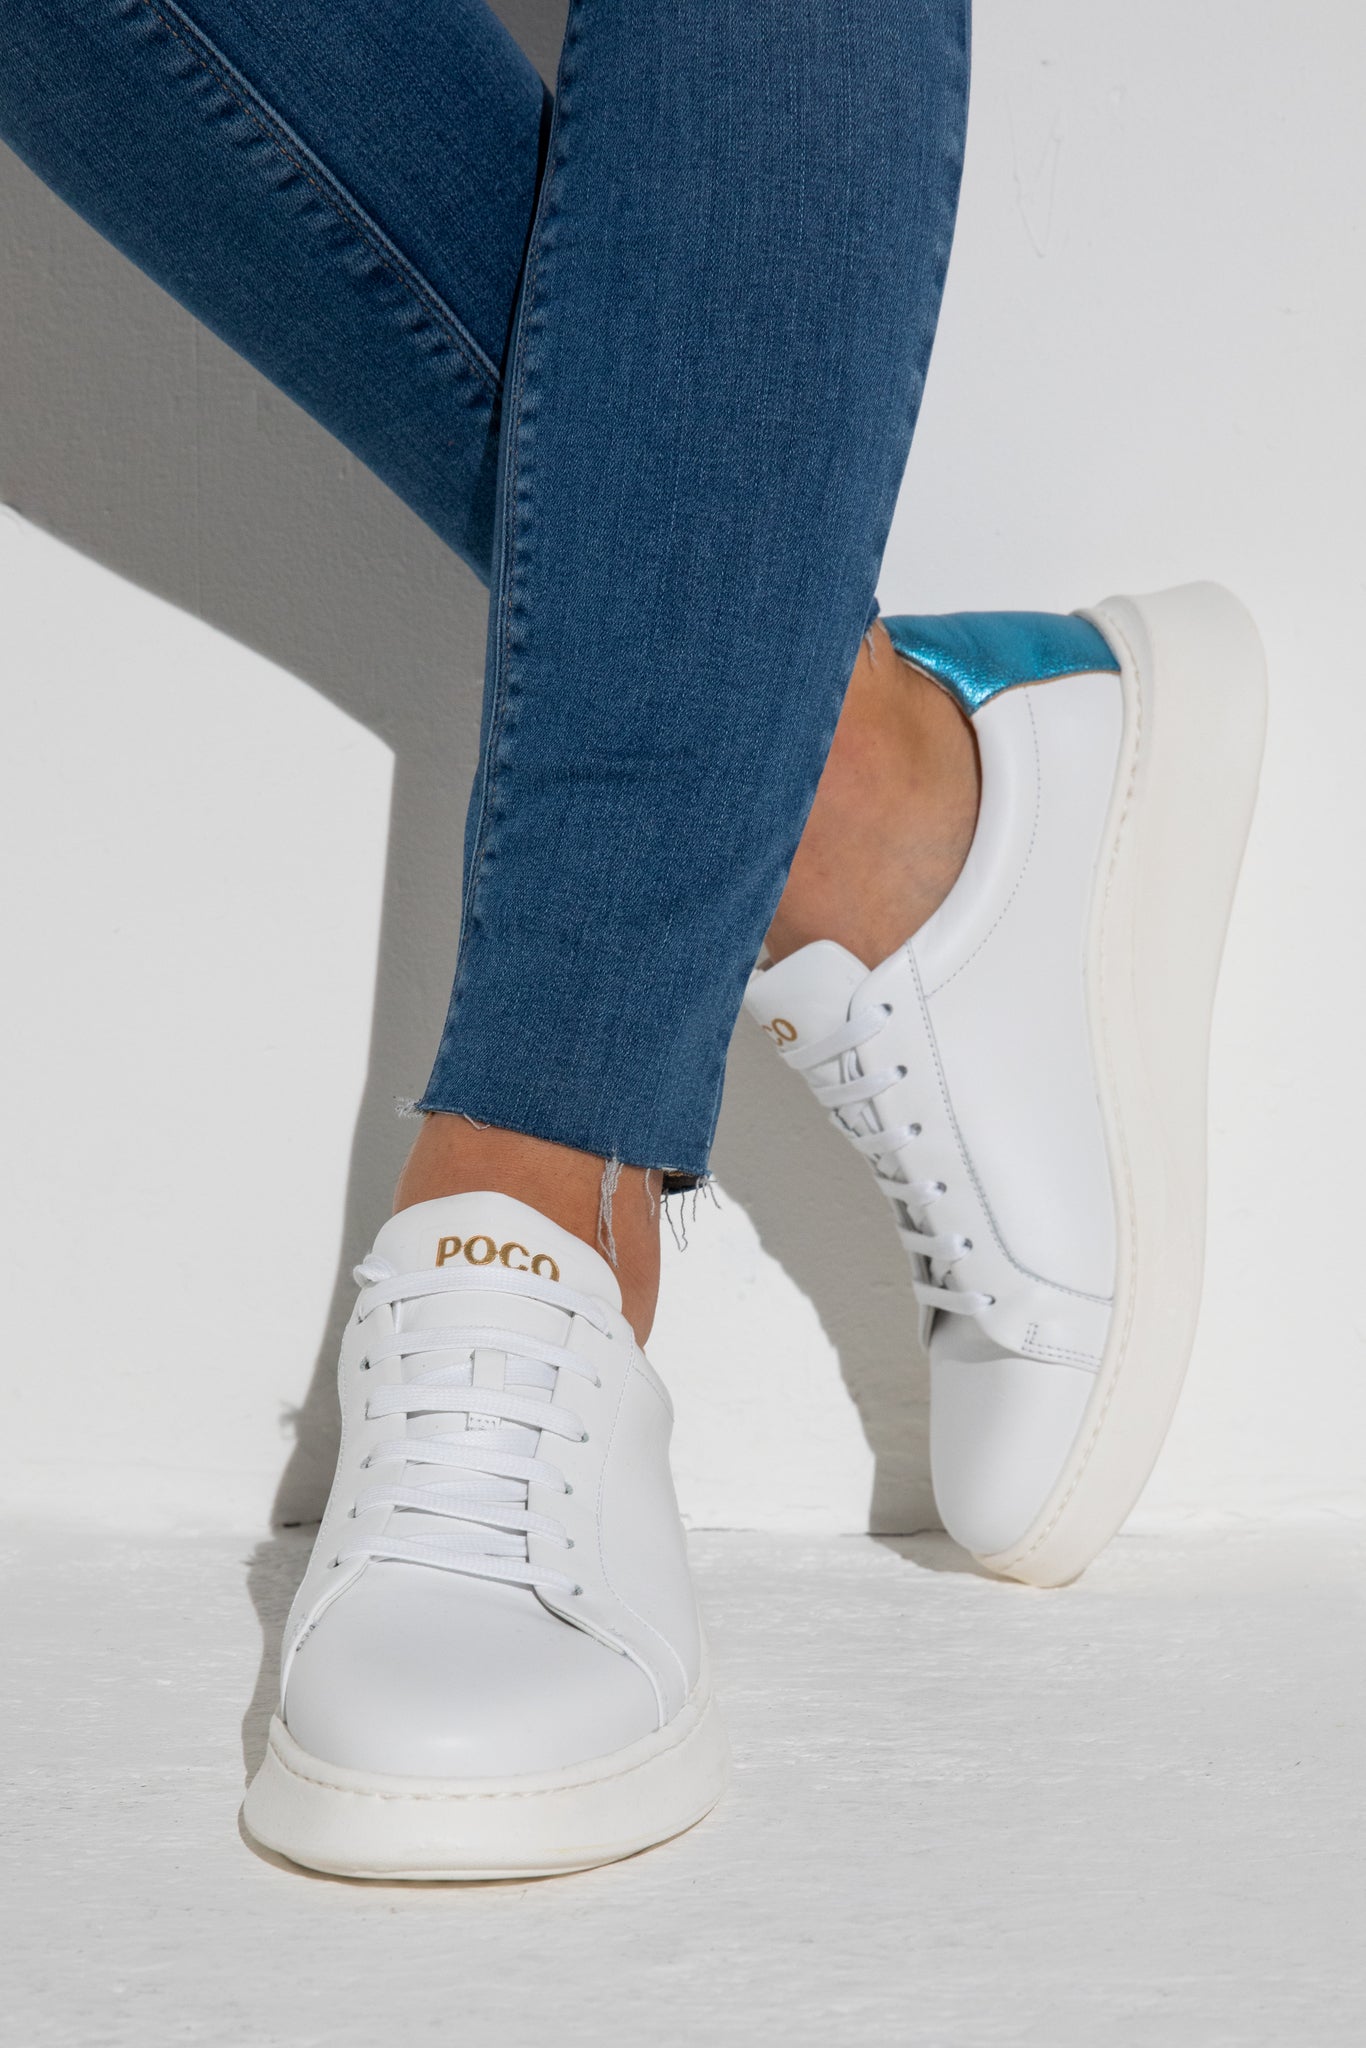 Susu White & Blue - Shoes - POCO by Pippa